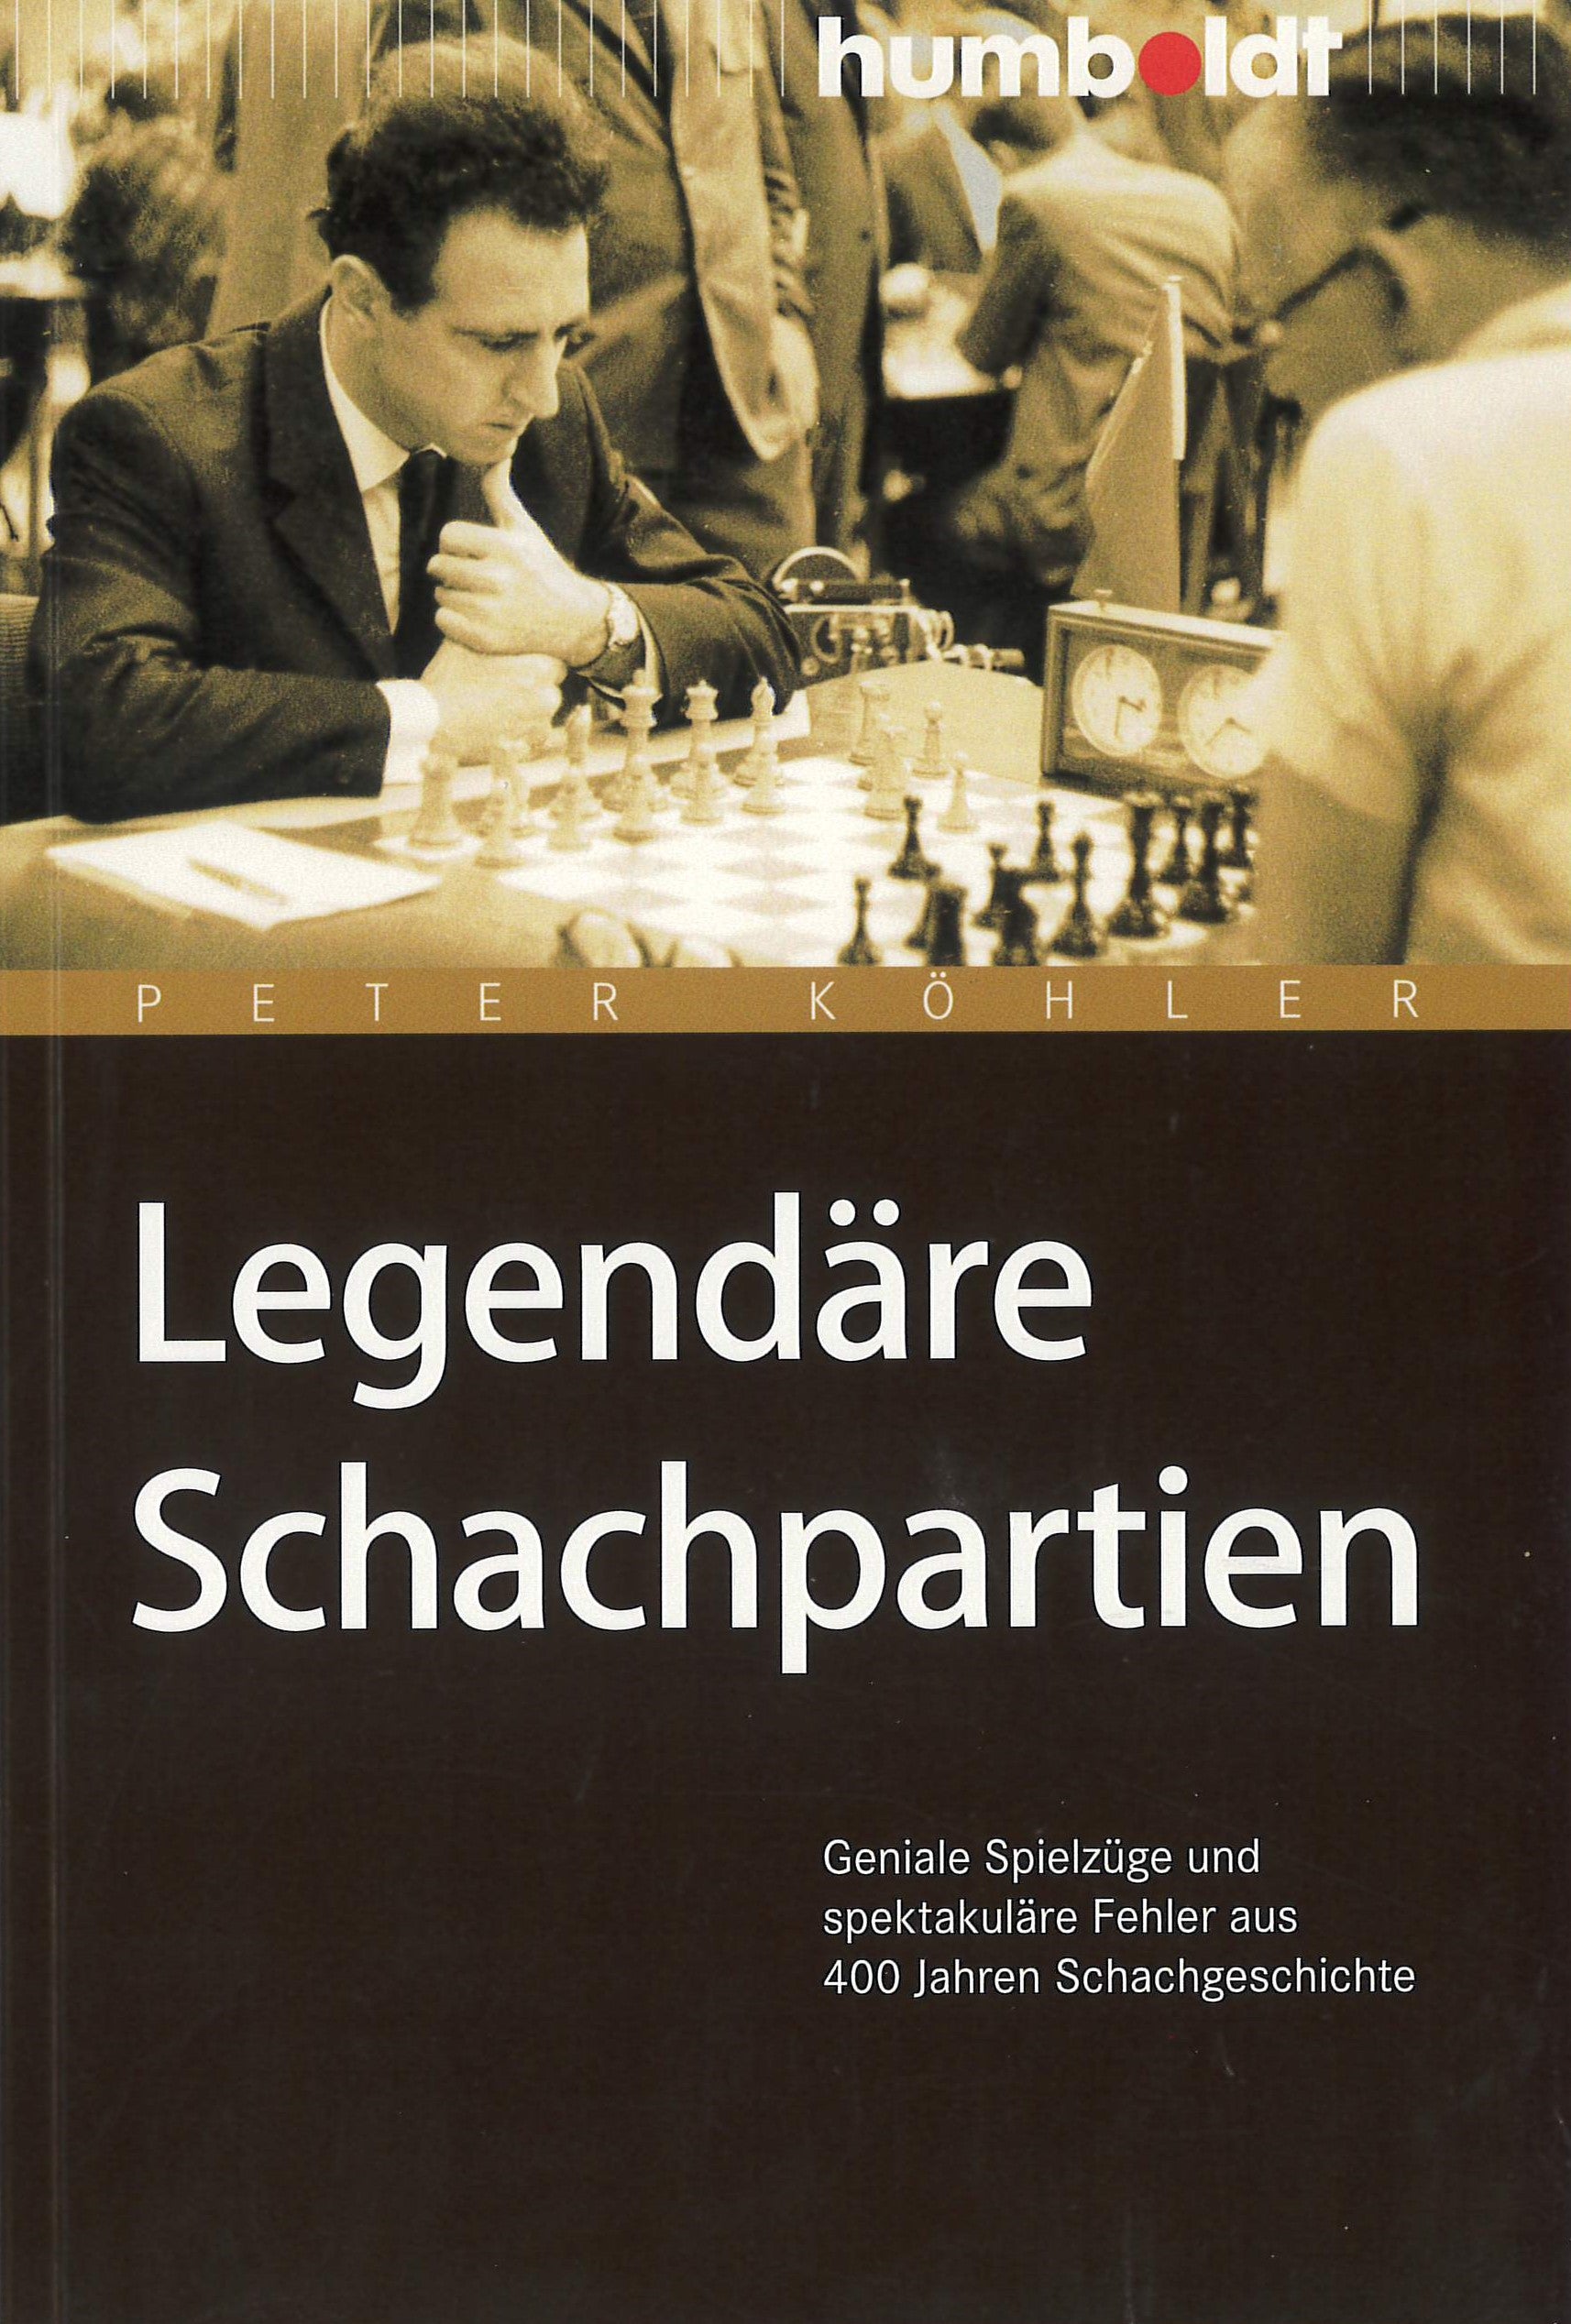 Köhler: Legendäre Schachpartien